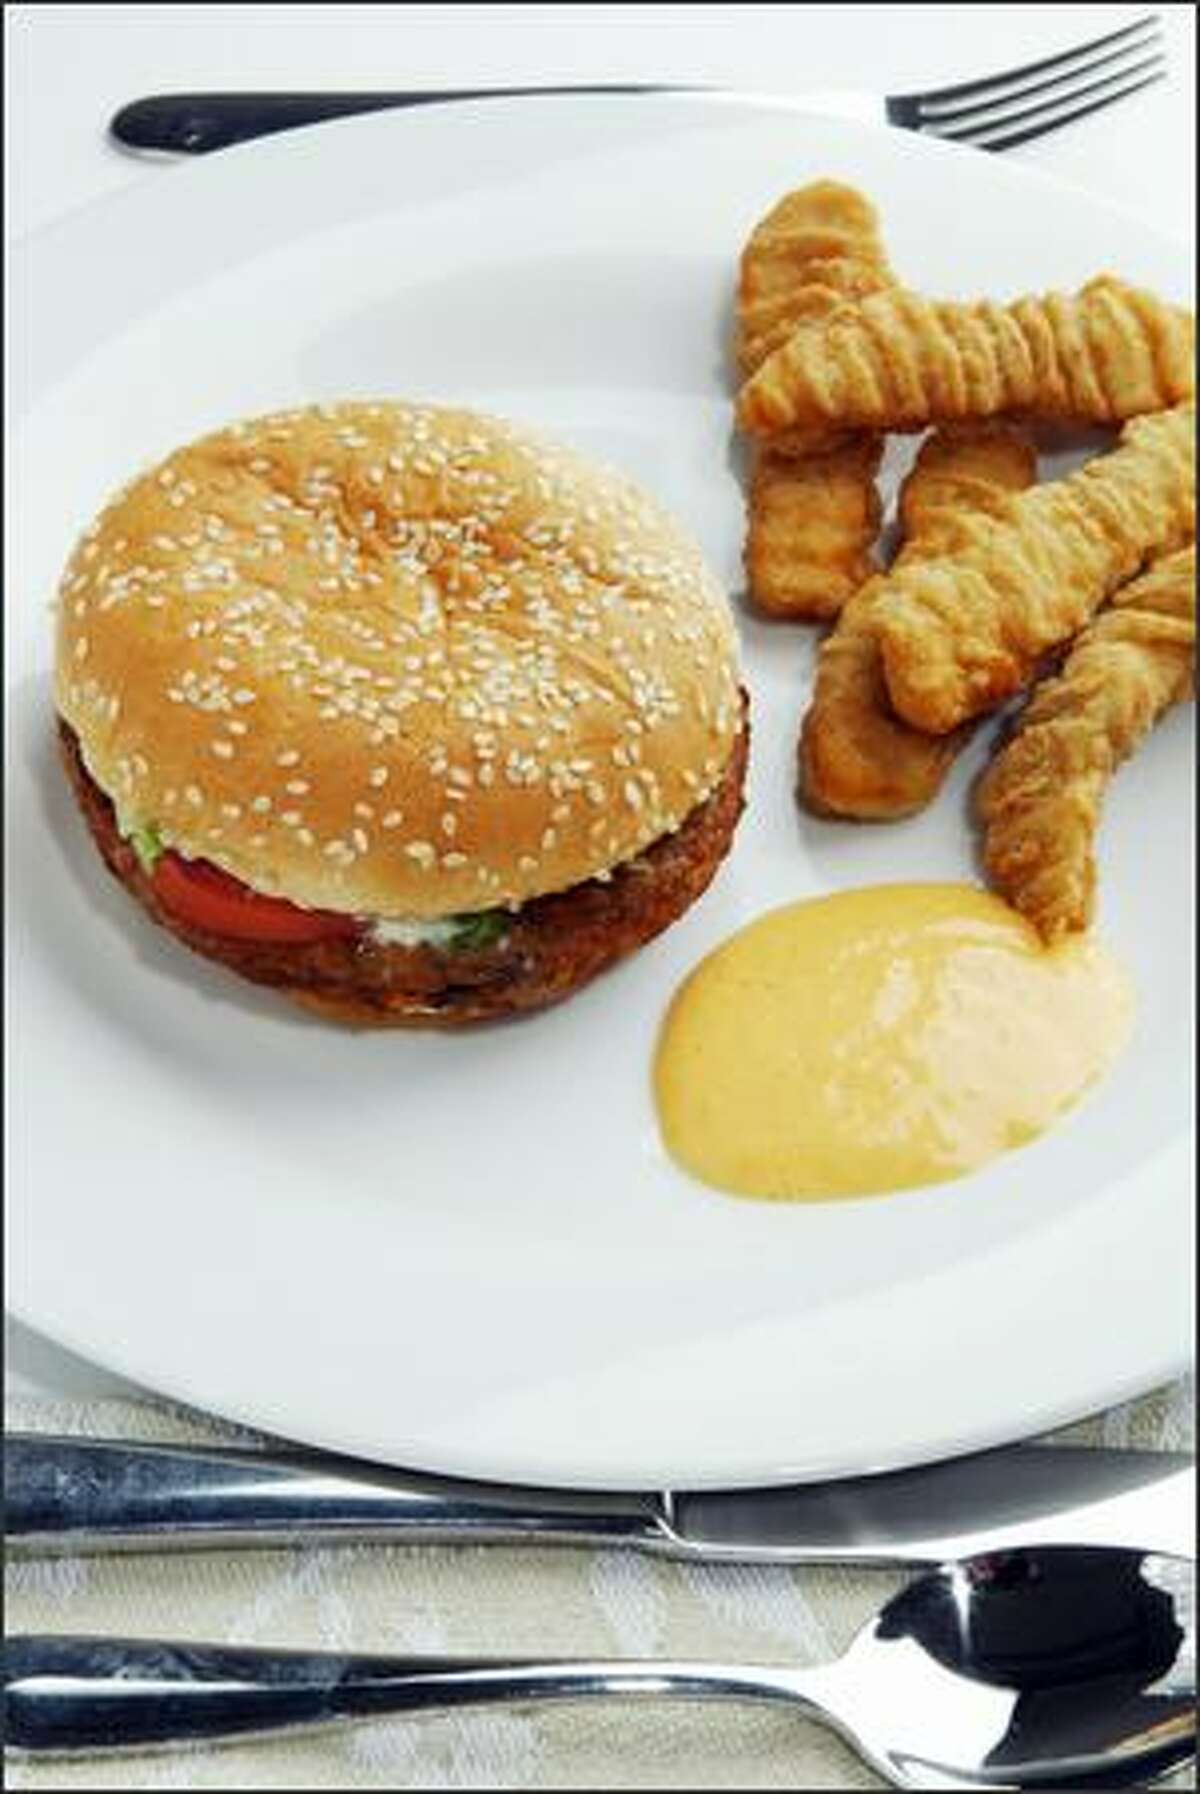 Burger King's veggie burger and Chicken Tenders.